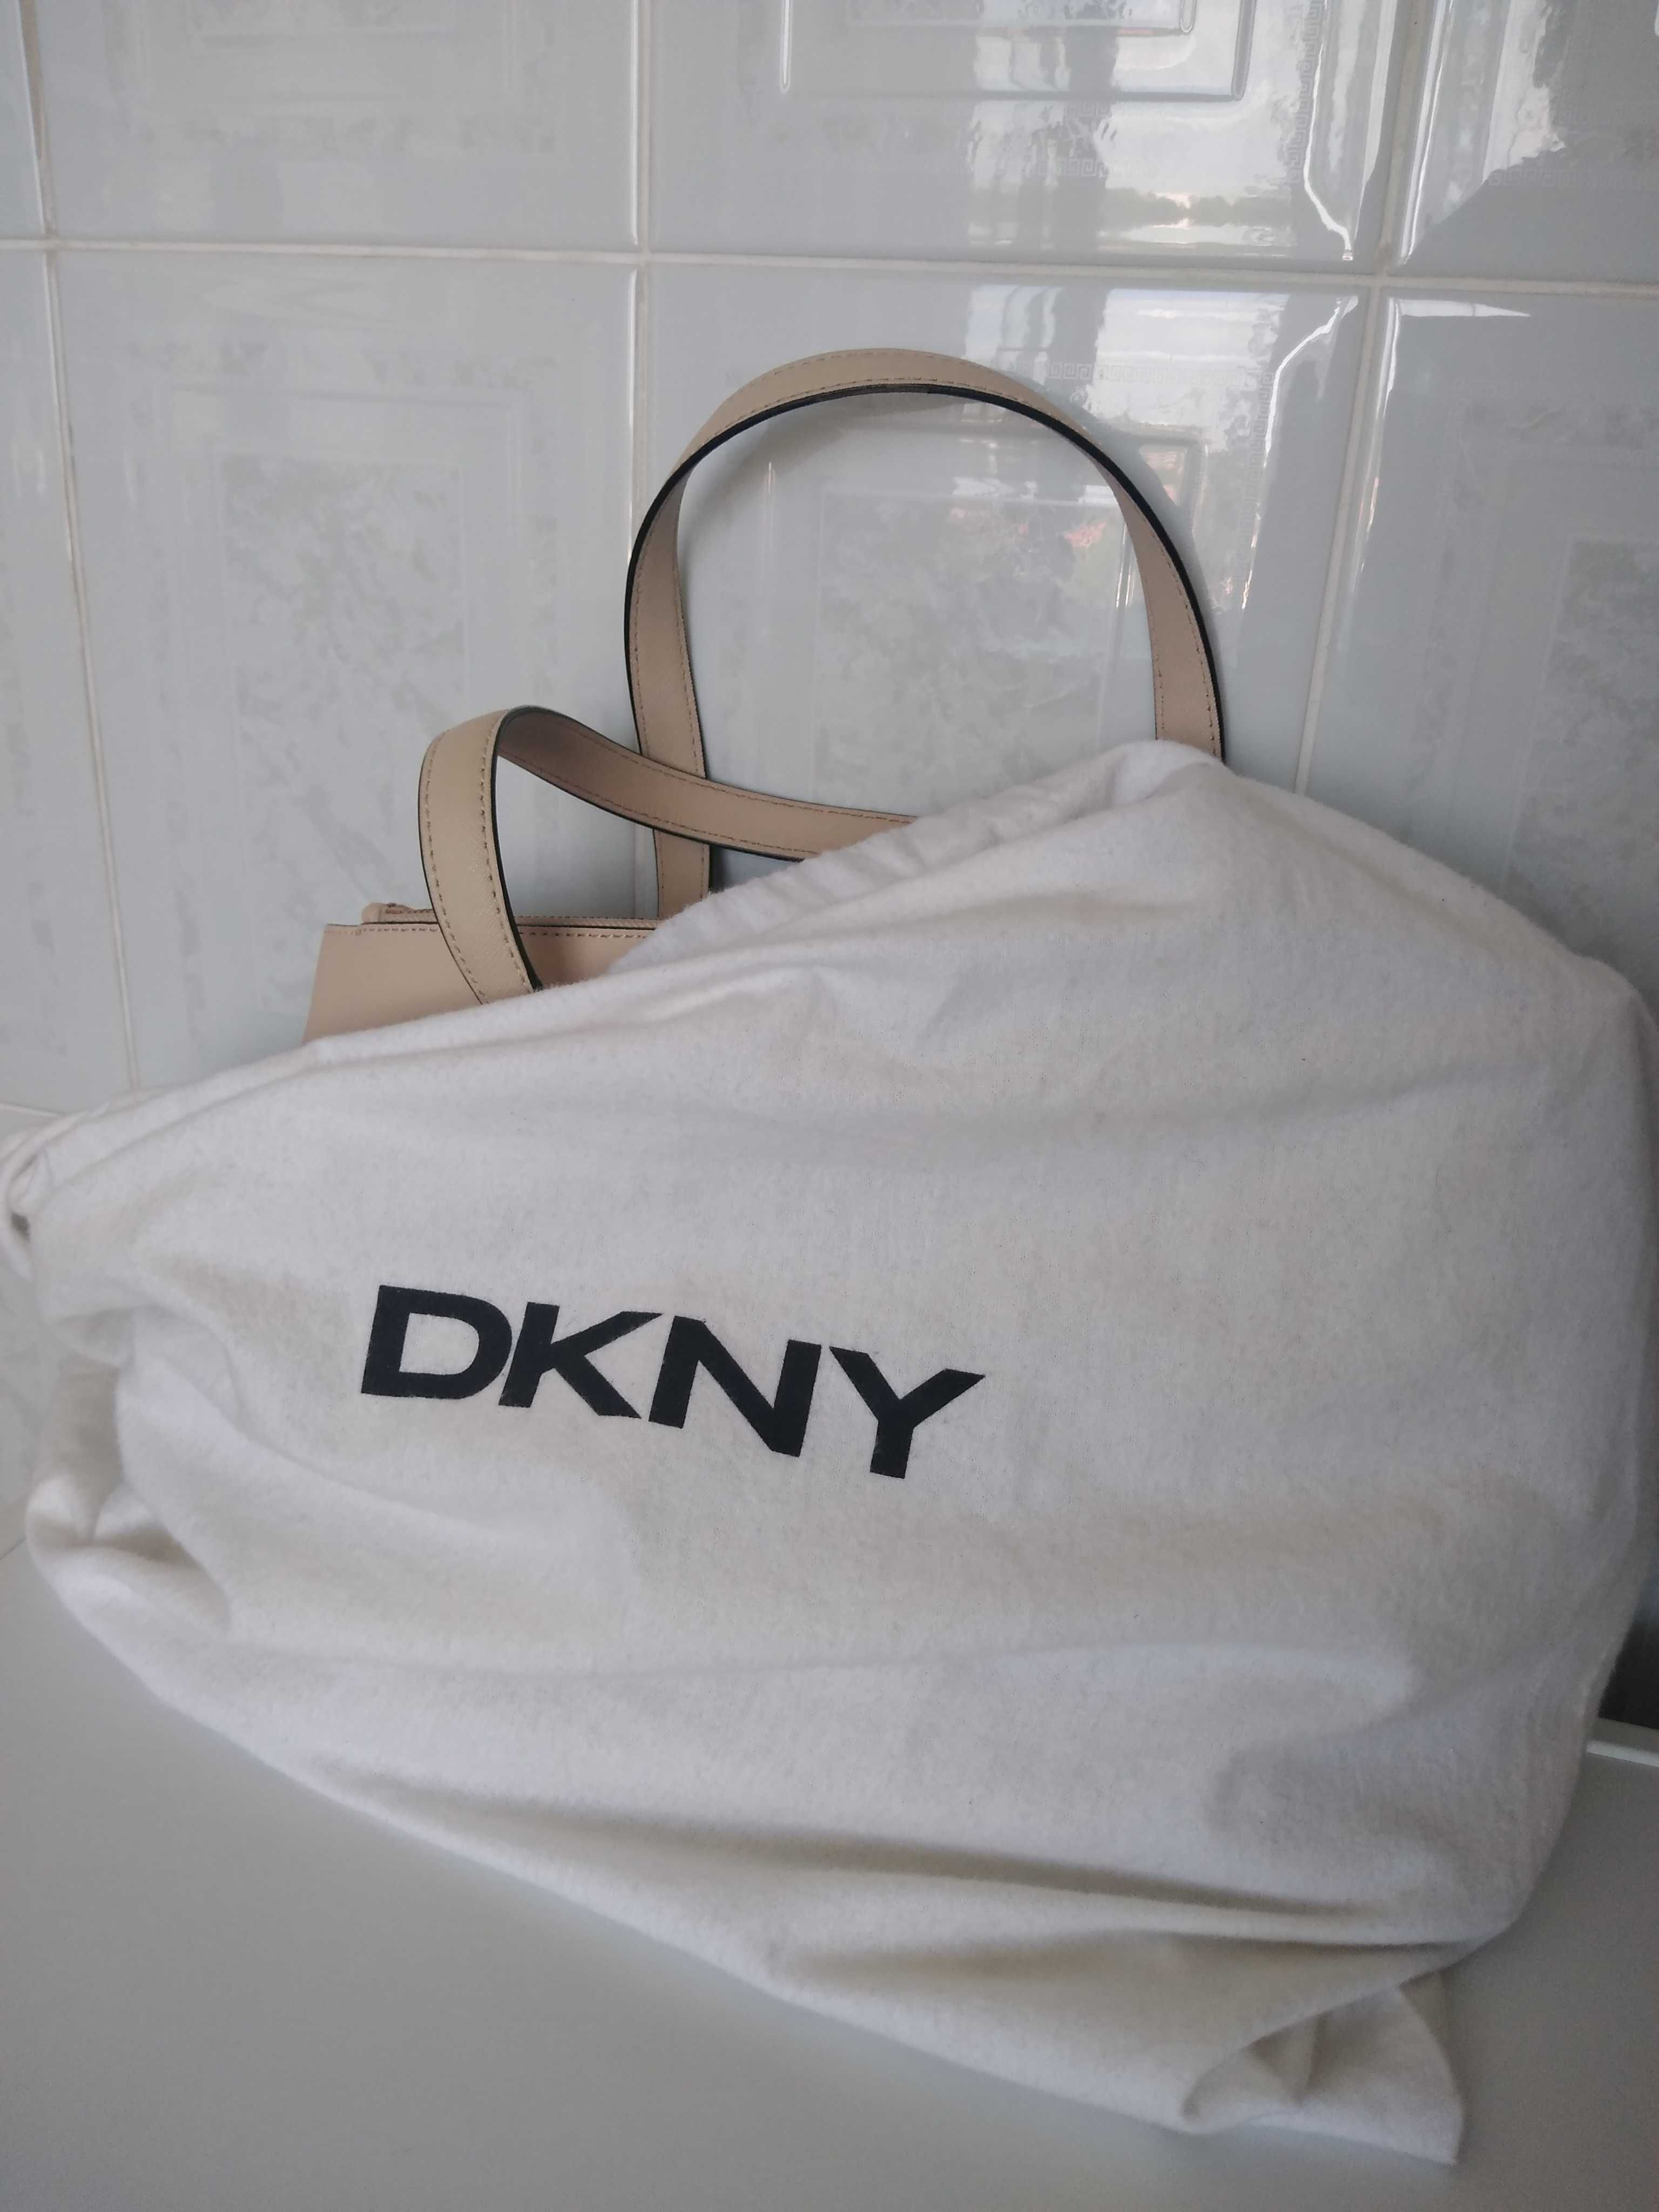 DKNY сумка, кошелек, сафьяновая кожа